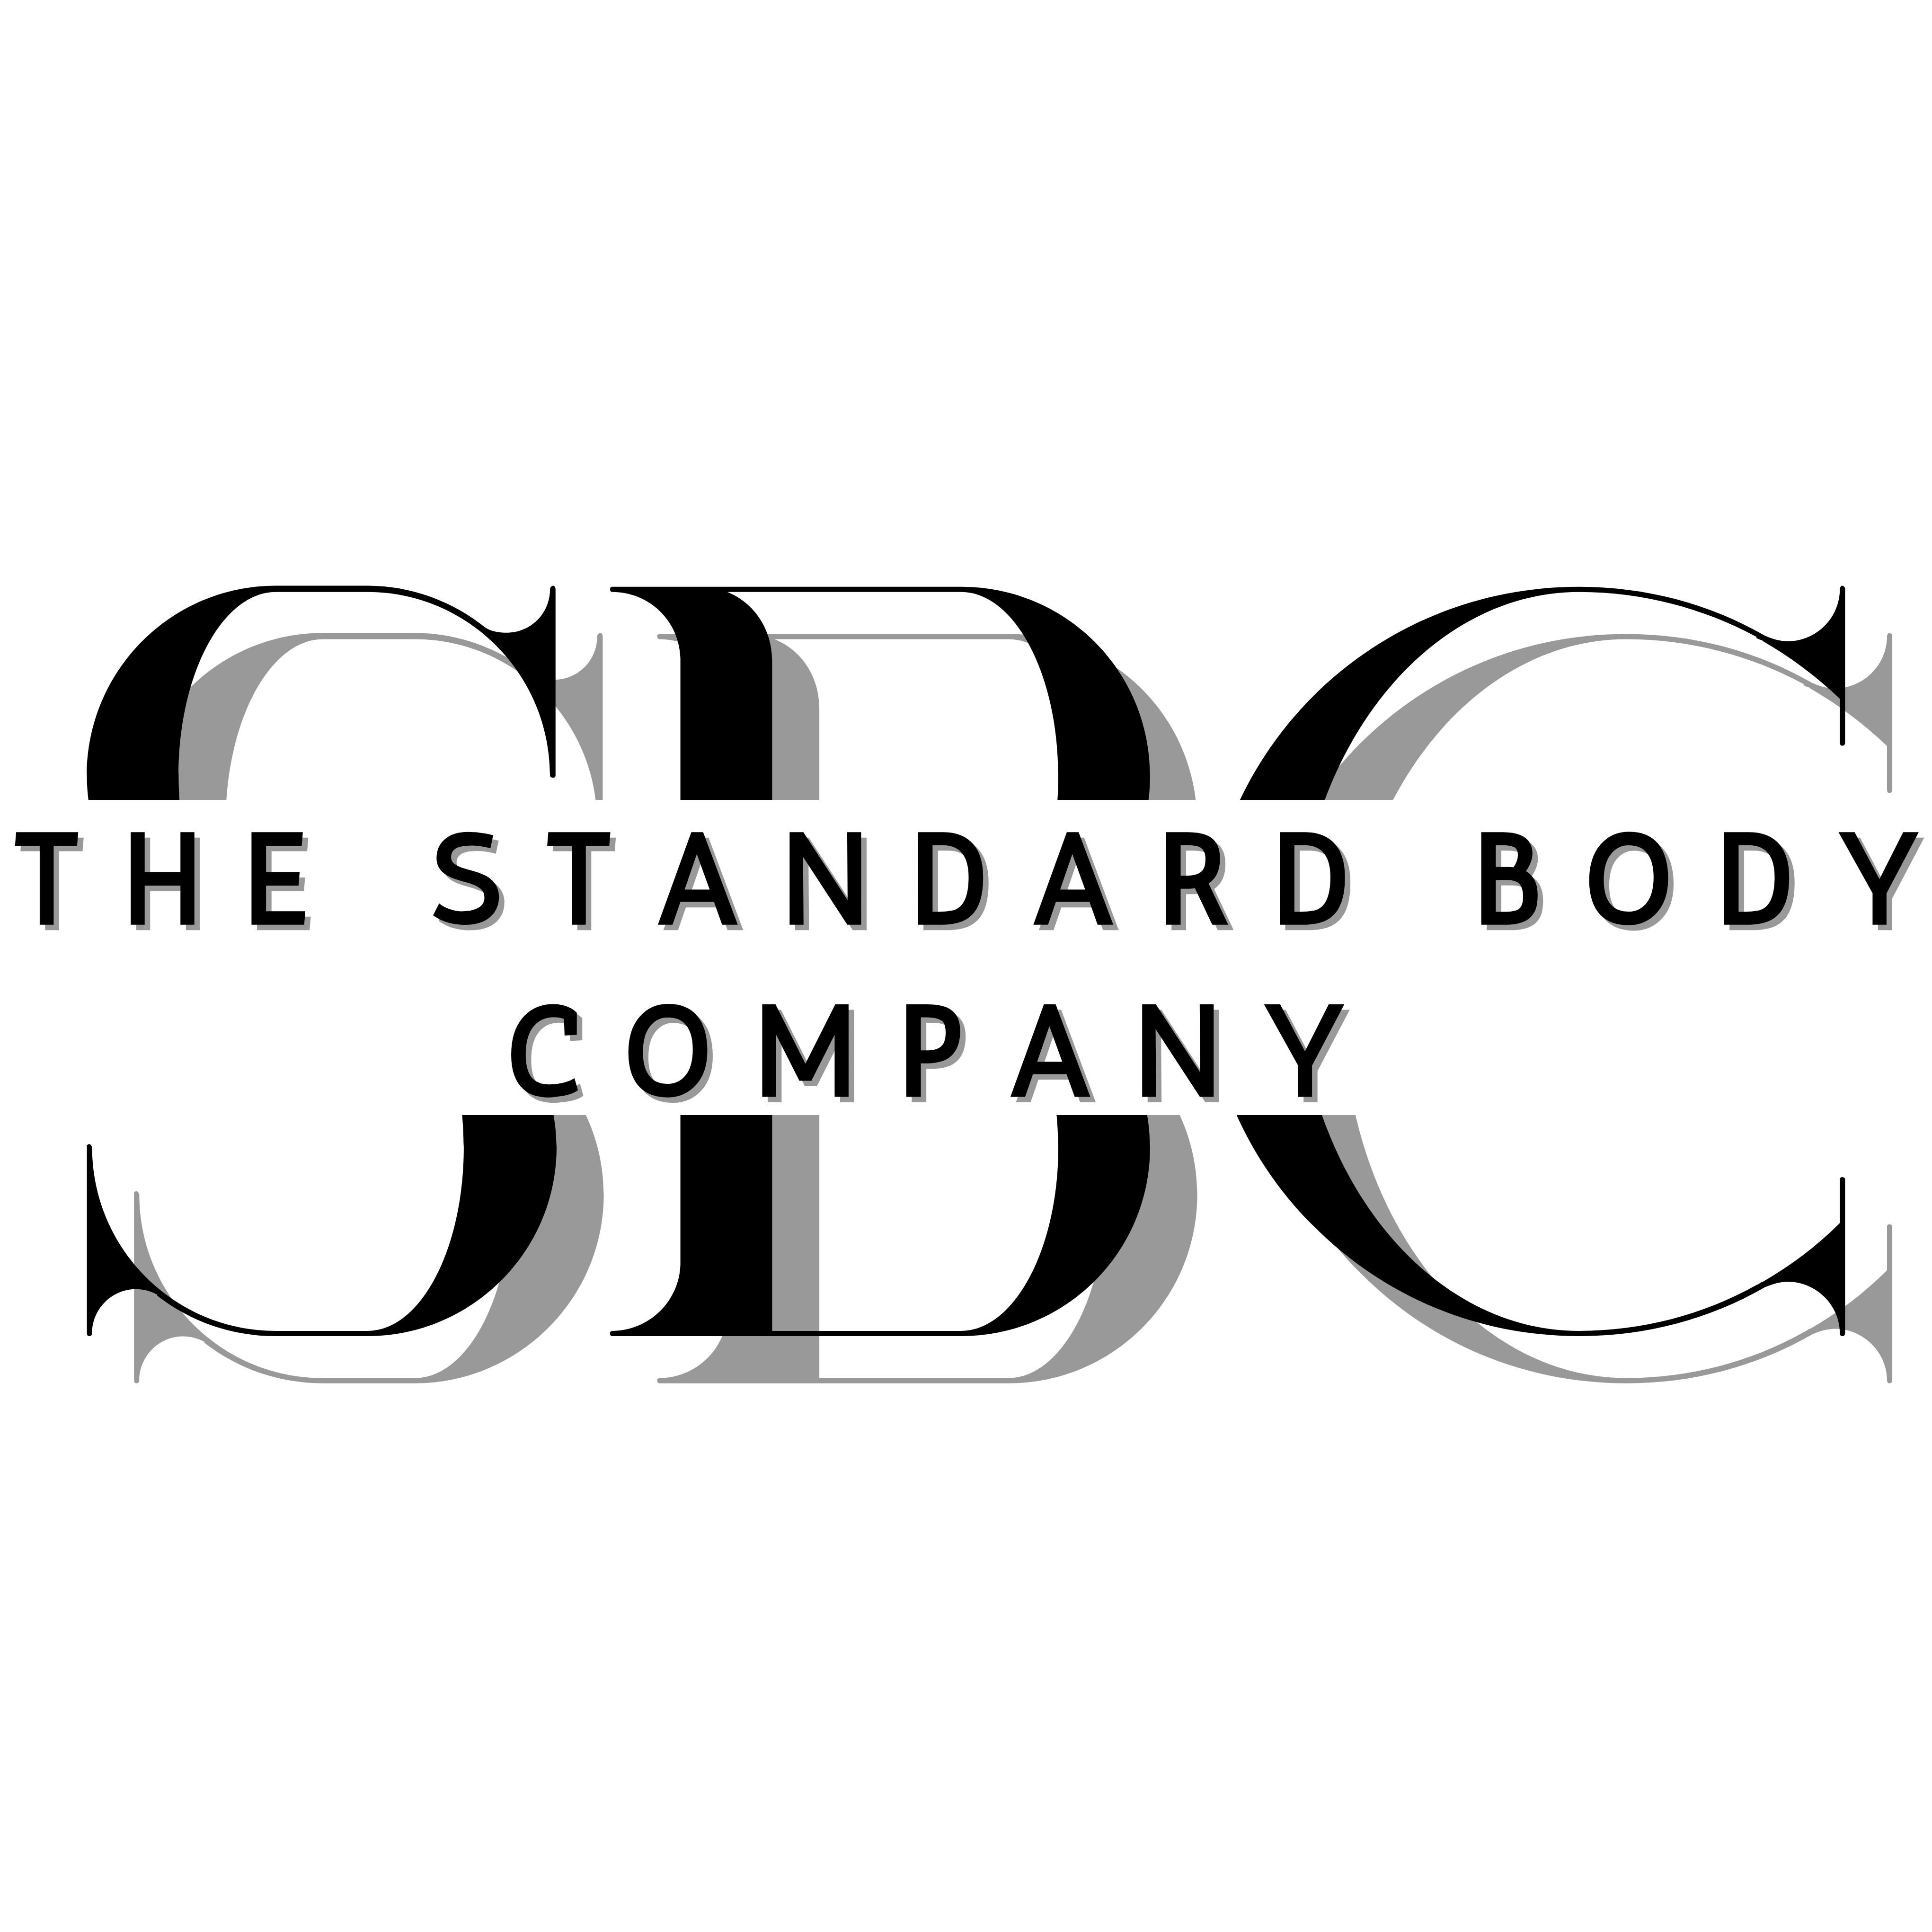 The Standard Body Company